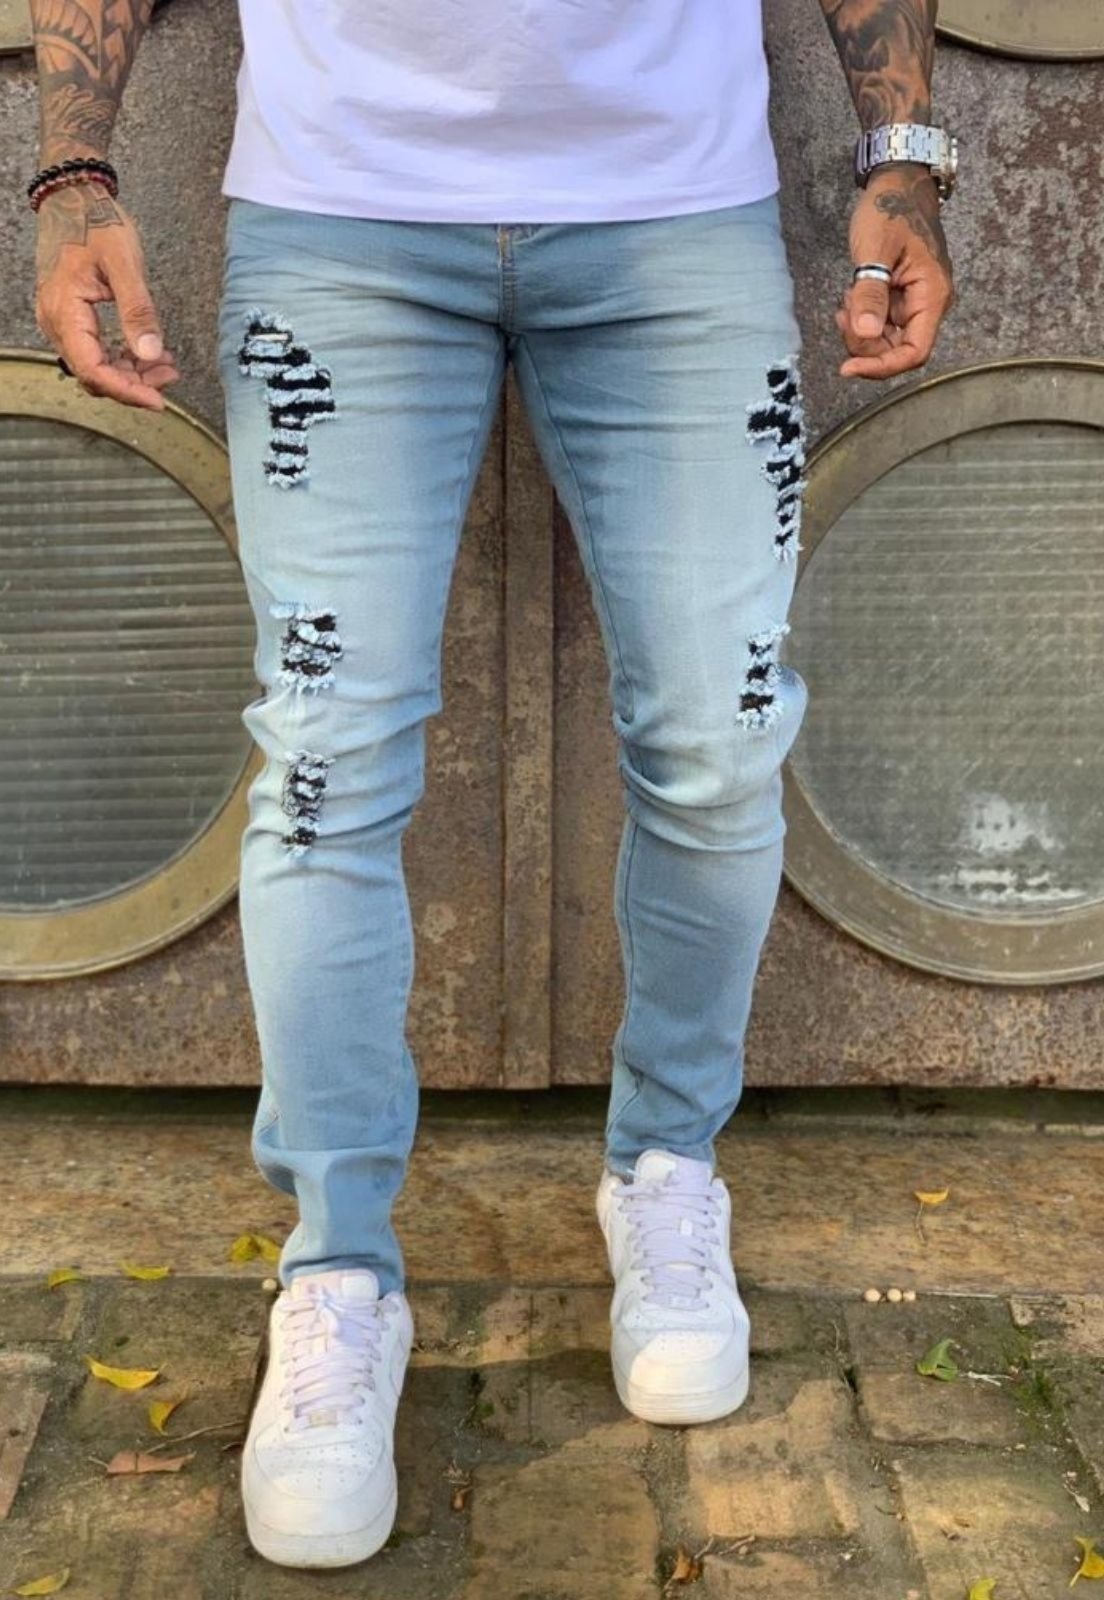 Calça jeans skinny rasgada masculina – Sport Finno